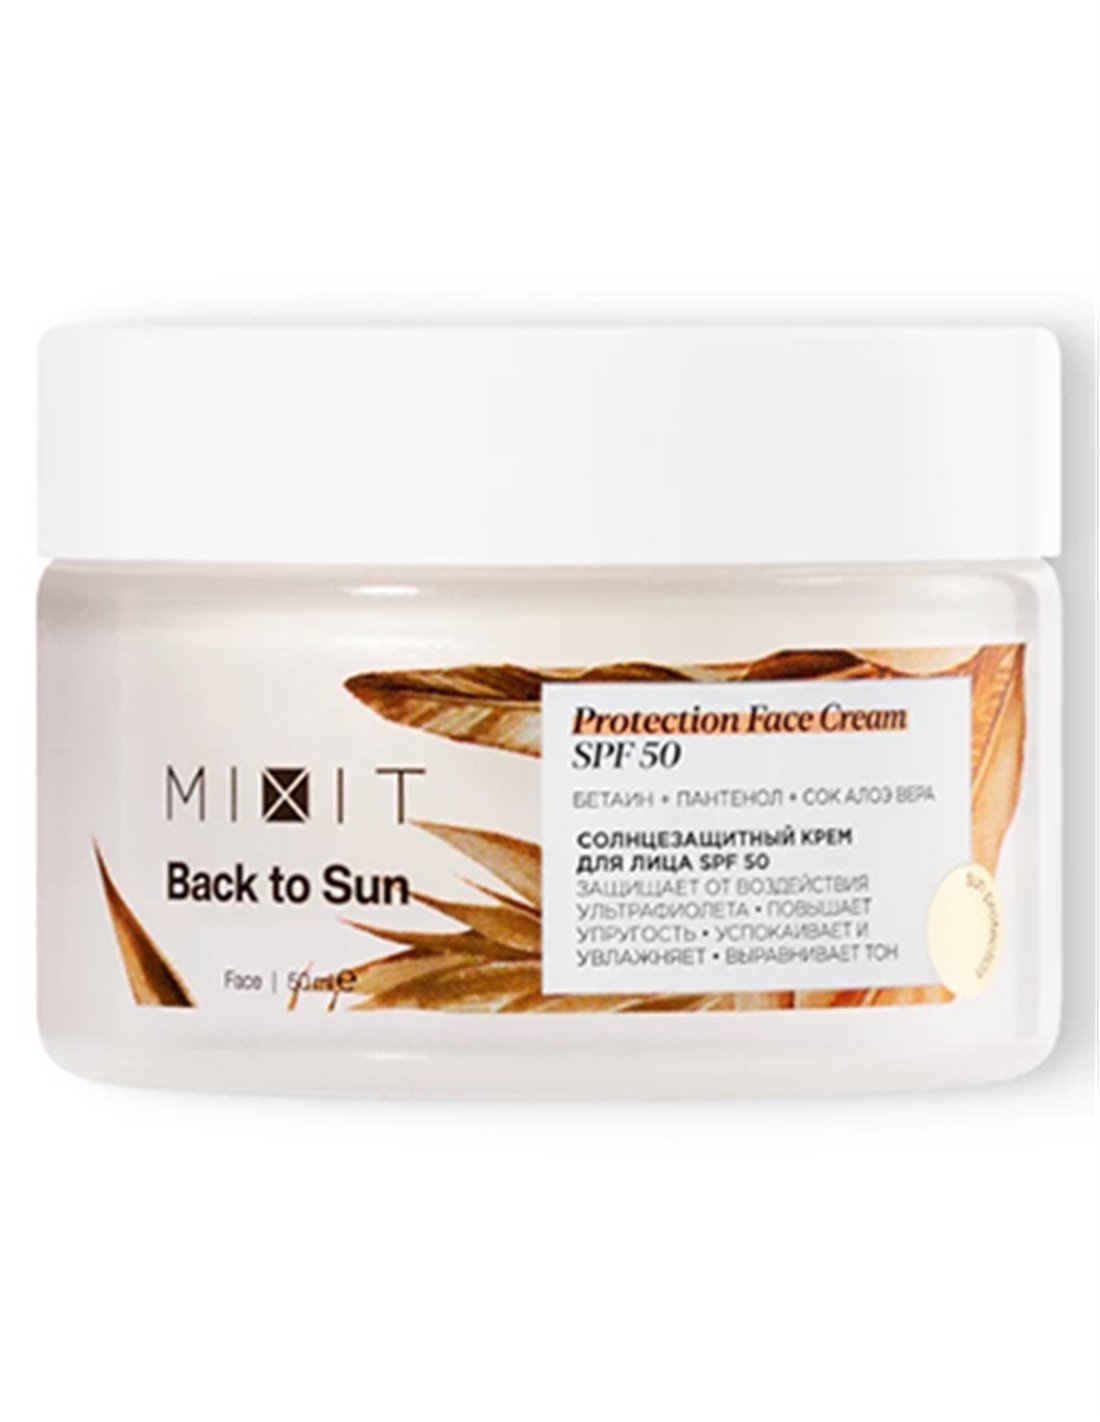 MIXIT Back to Sun Protection Face Cream SPF50 / 1.69oz